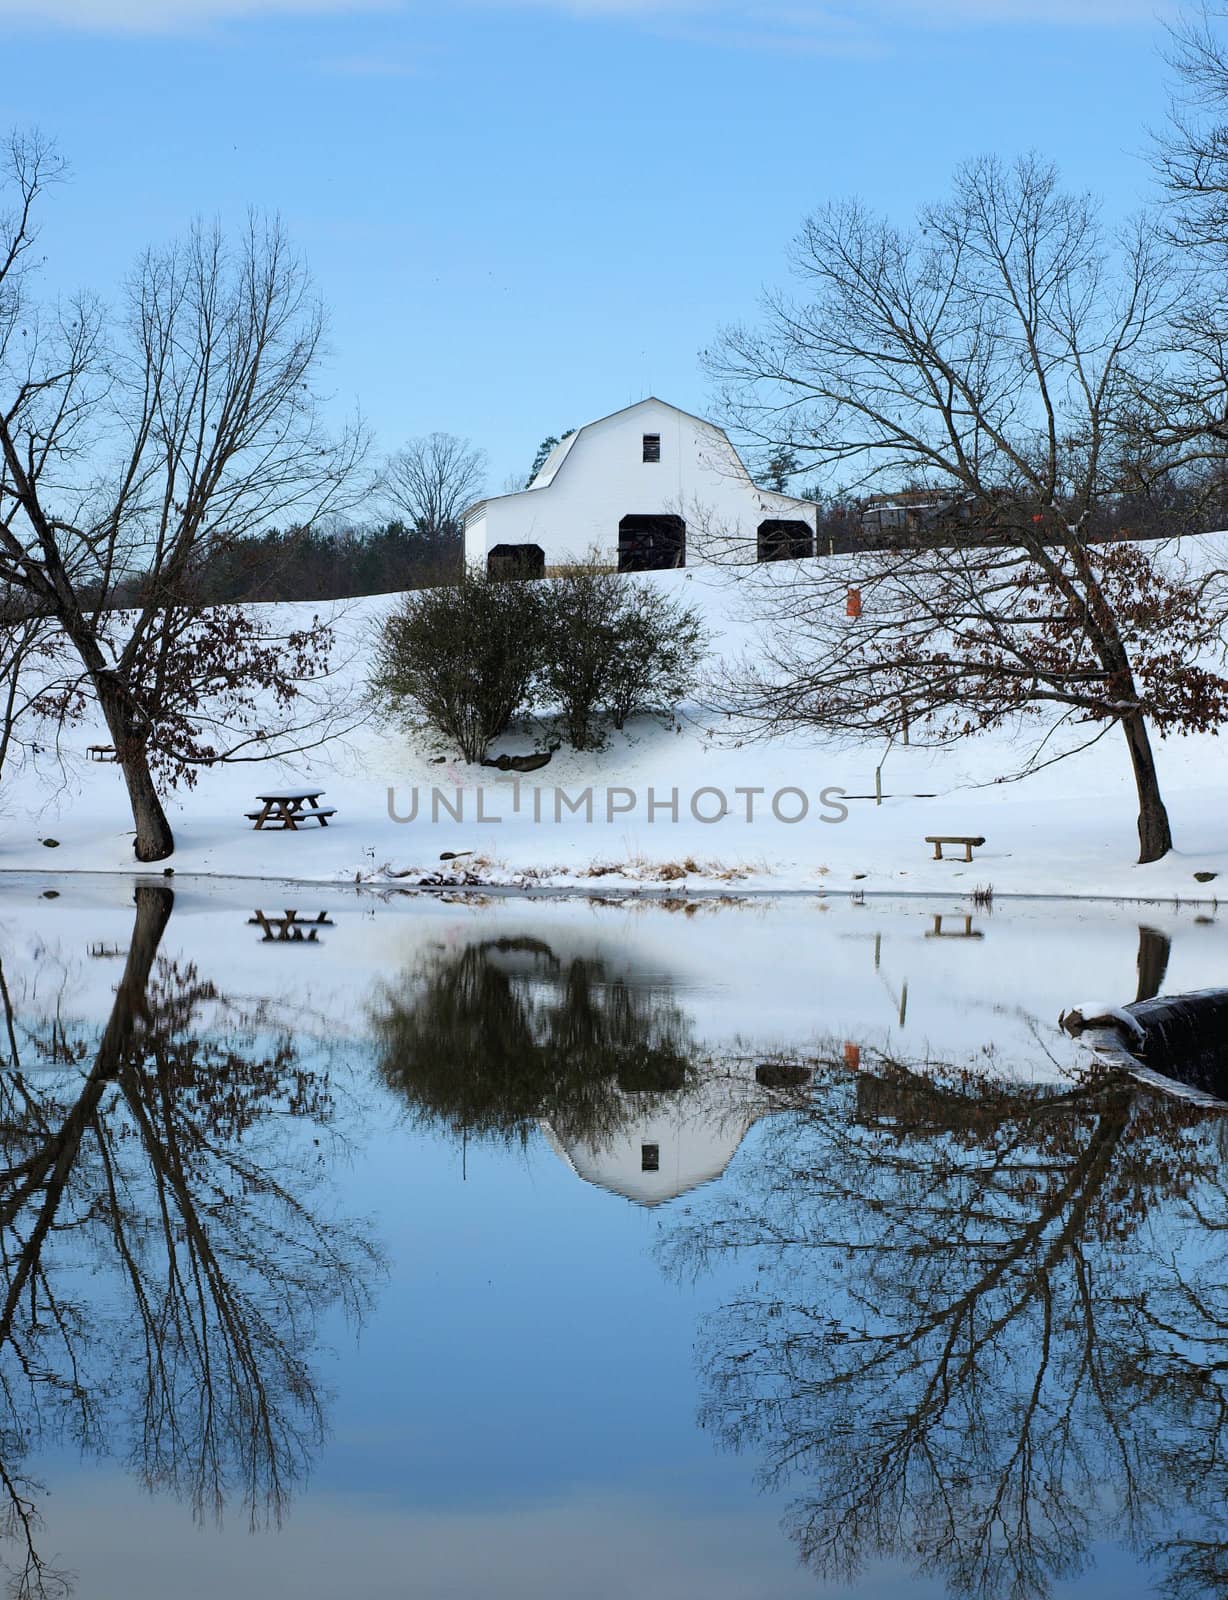 A winter scene at a small lake in rural North Carolina